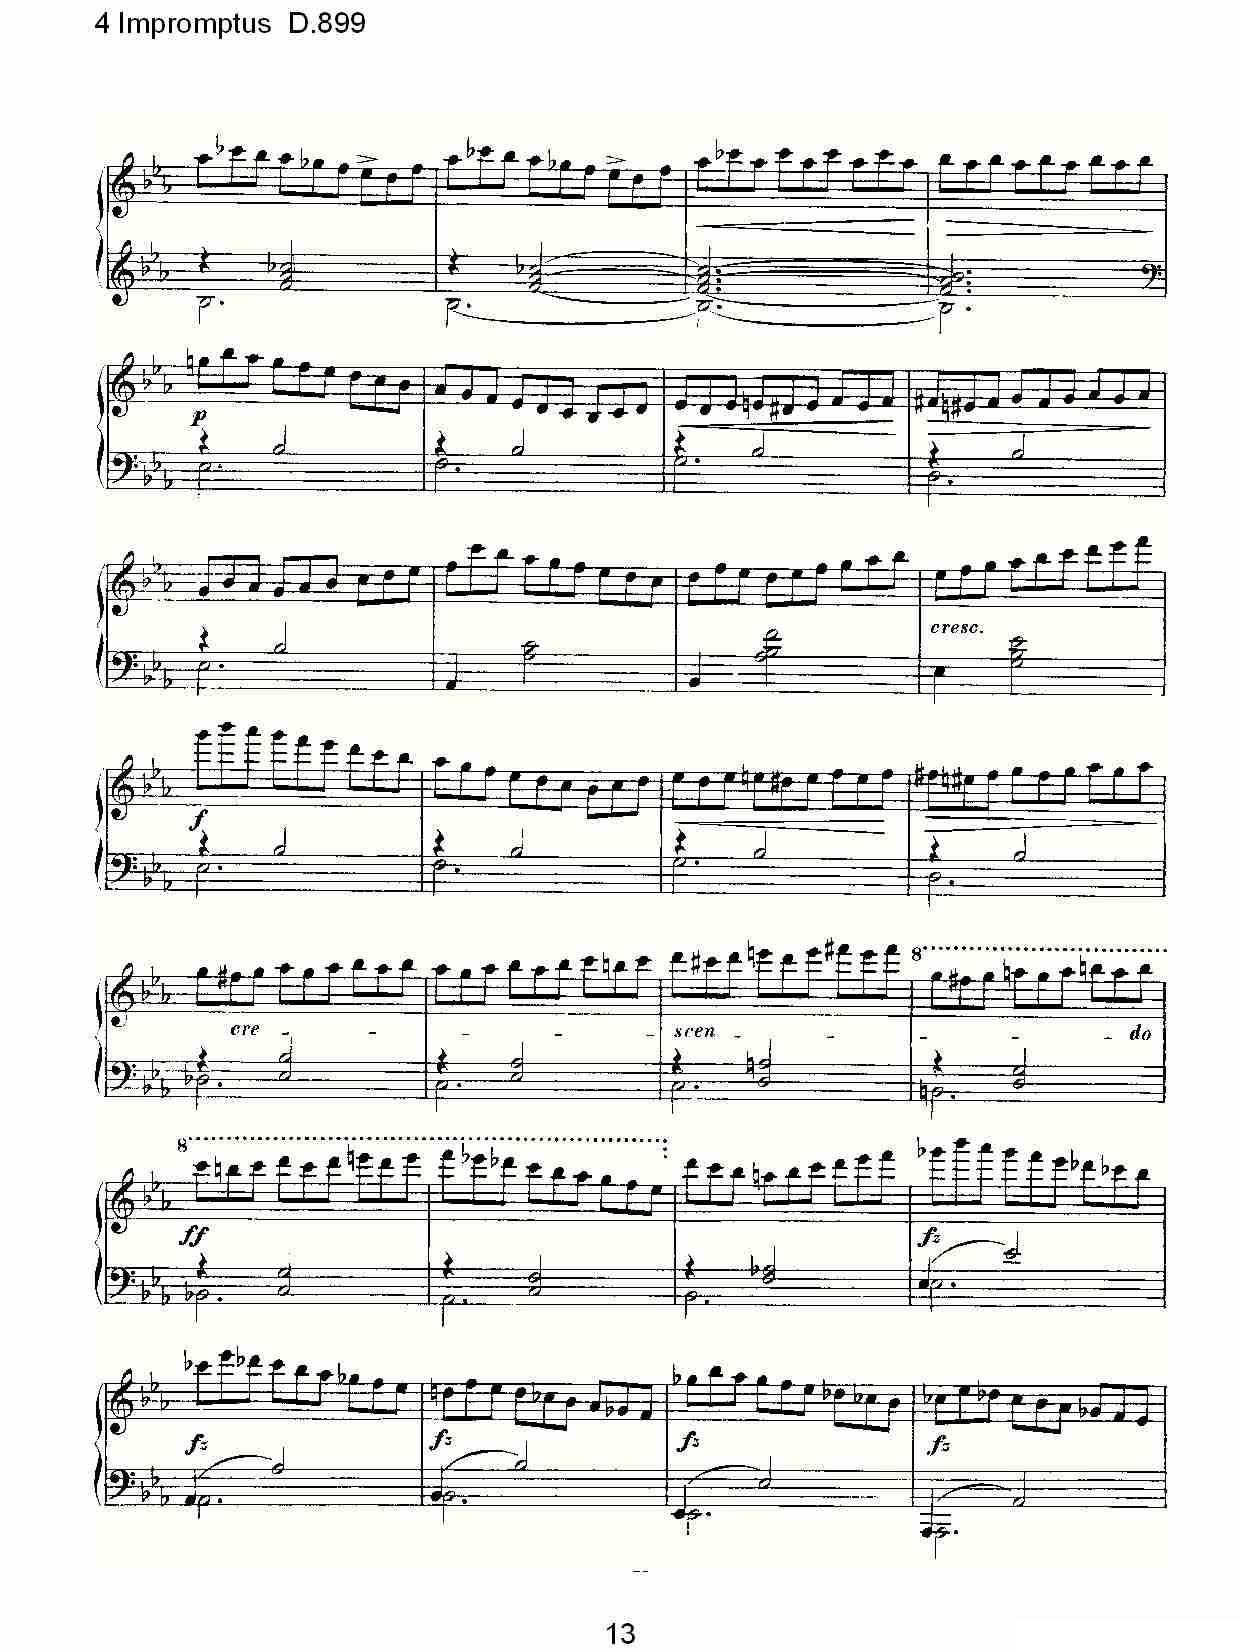 4 Impromptus D.899（4人即兴演奏 D.899）钢琴曲谱（图13）